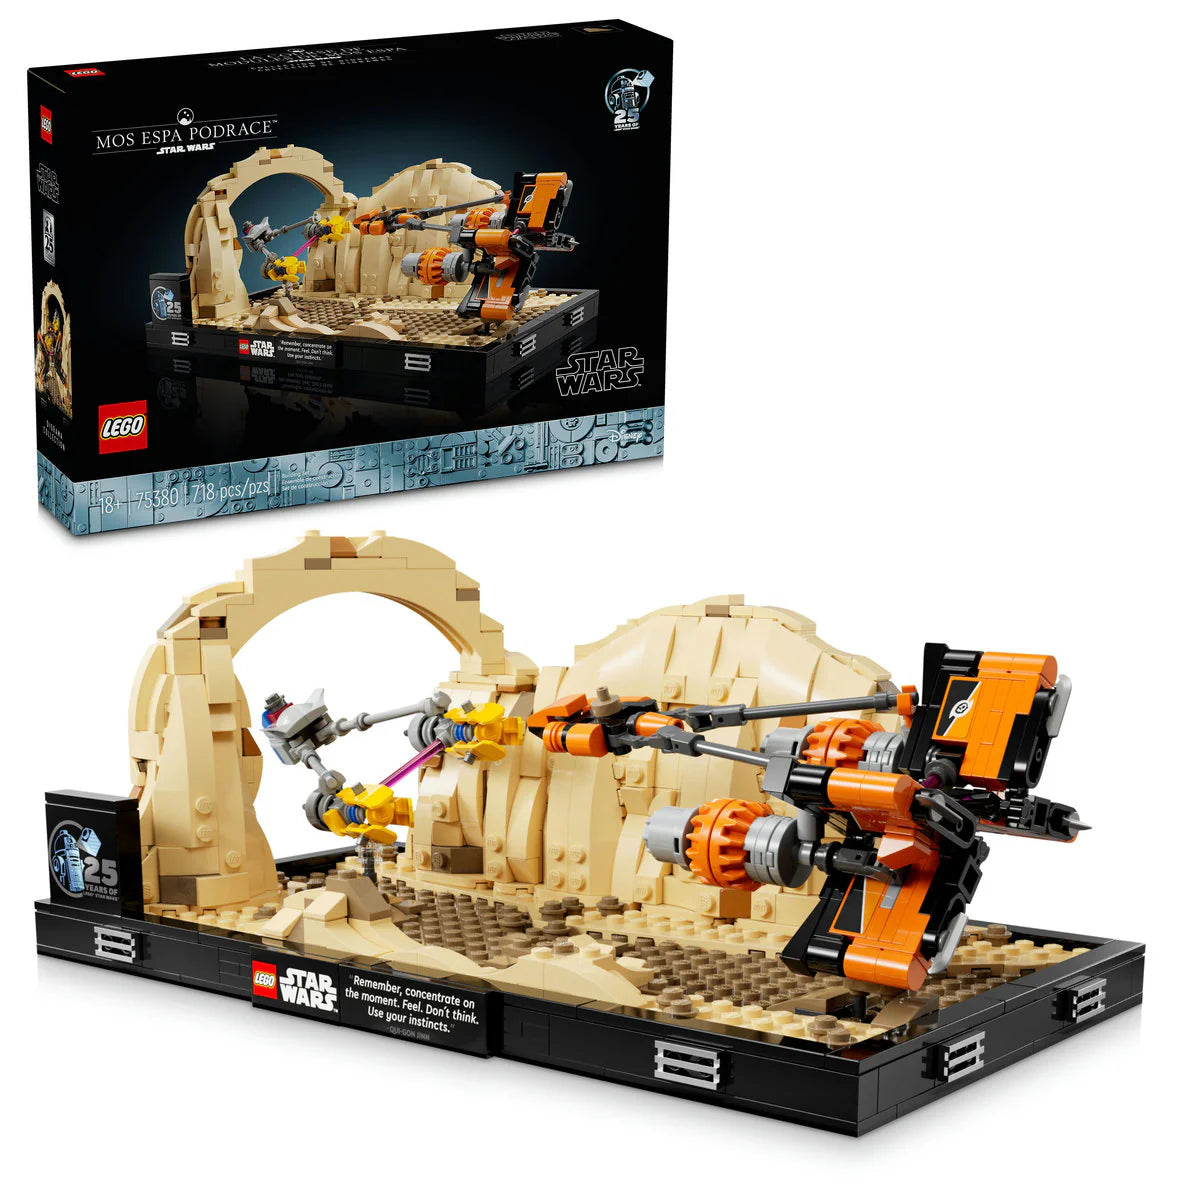 LEGO Star Wars Mos Espa Pod Race Set (75380) Diorama Collection